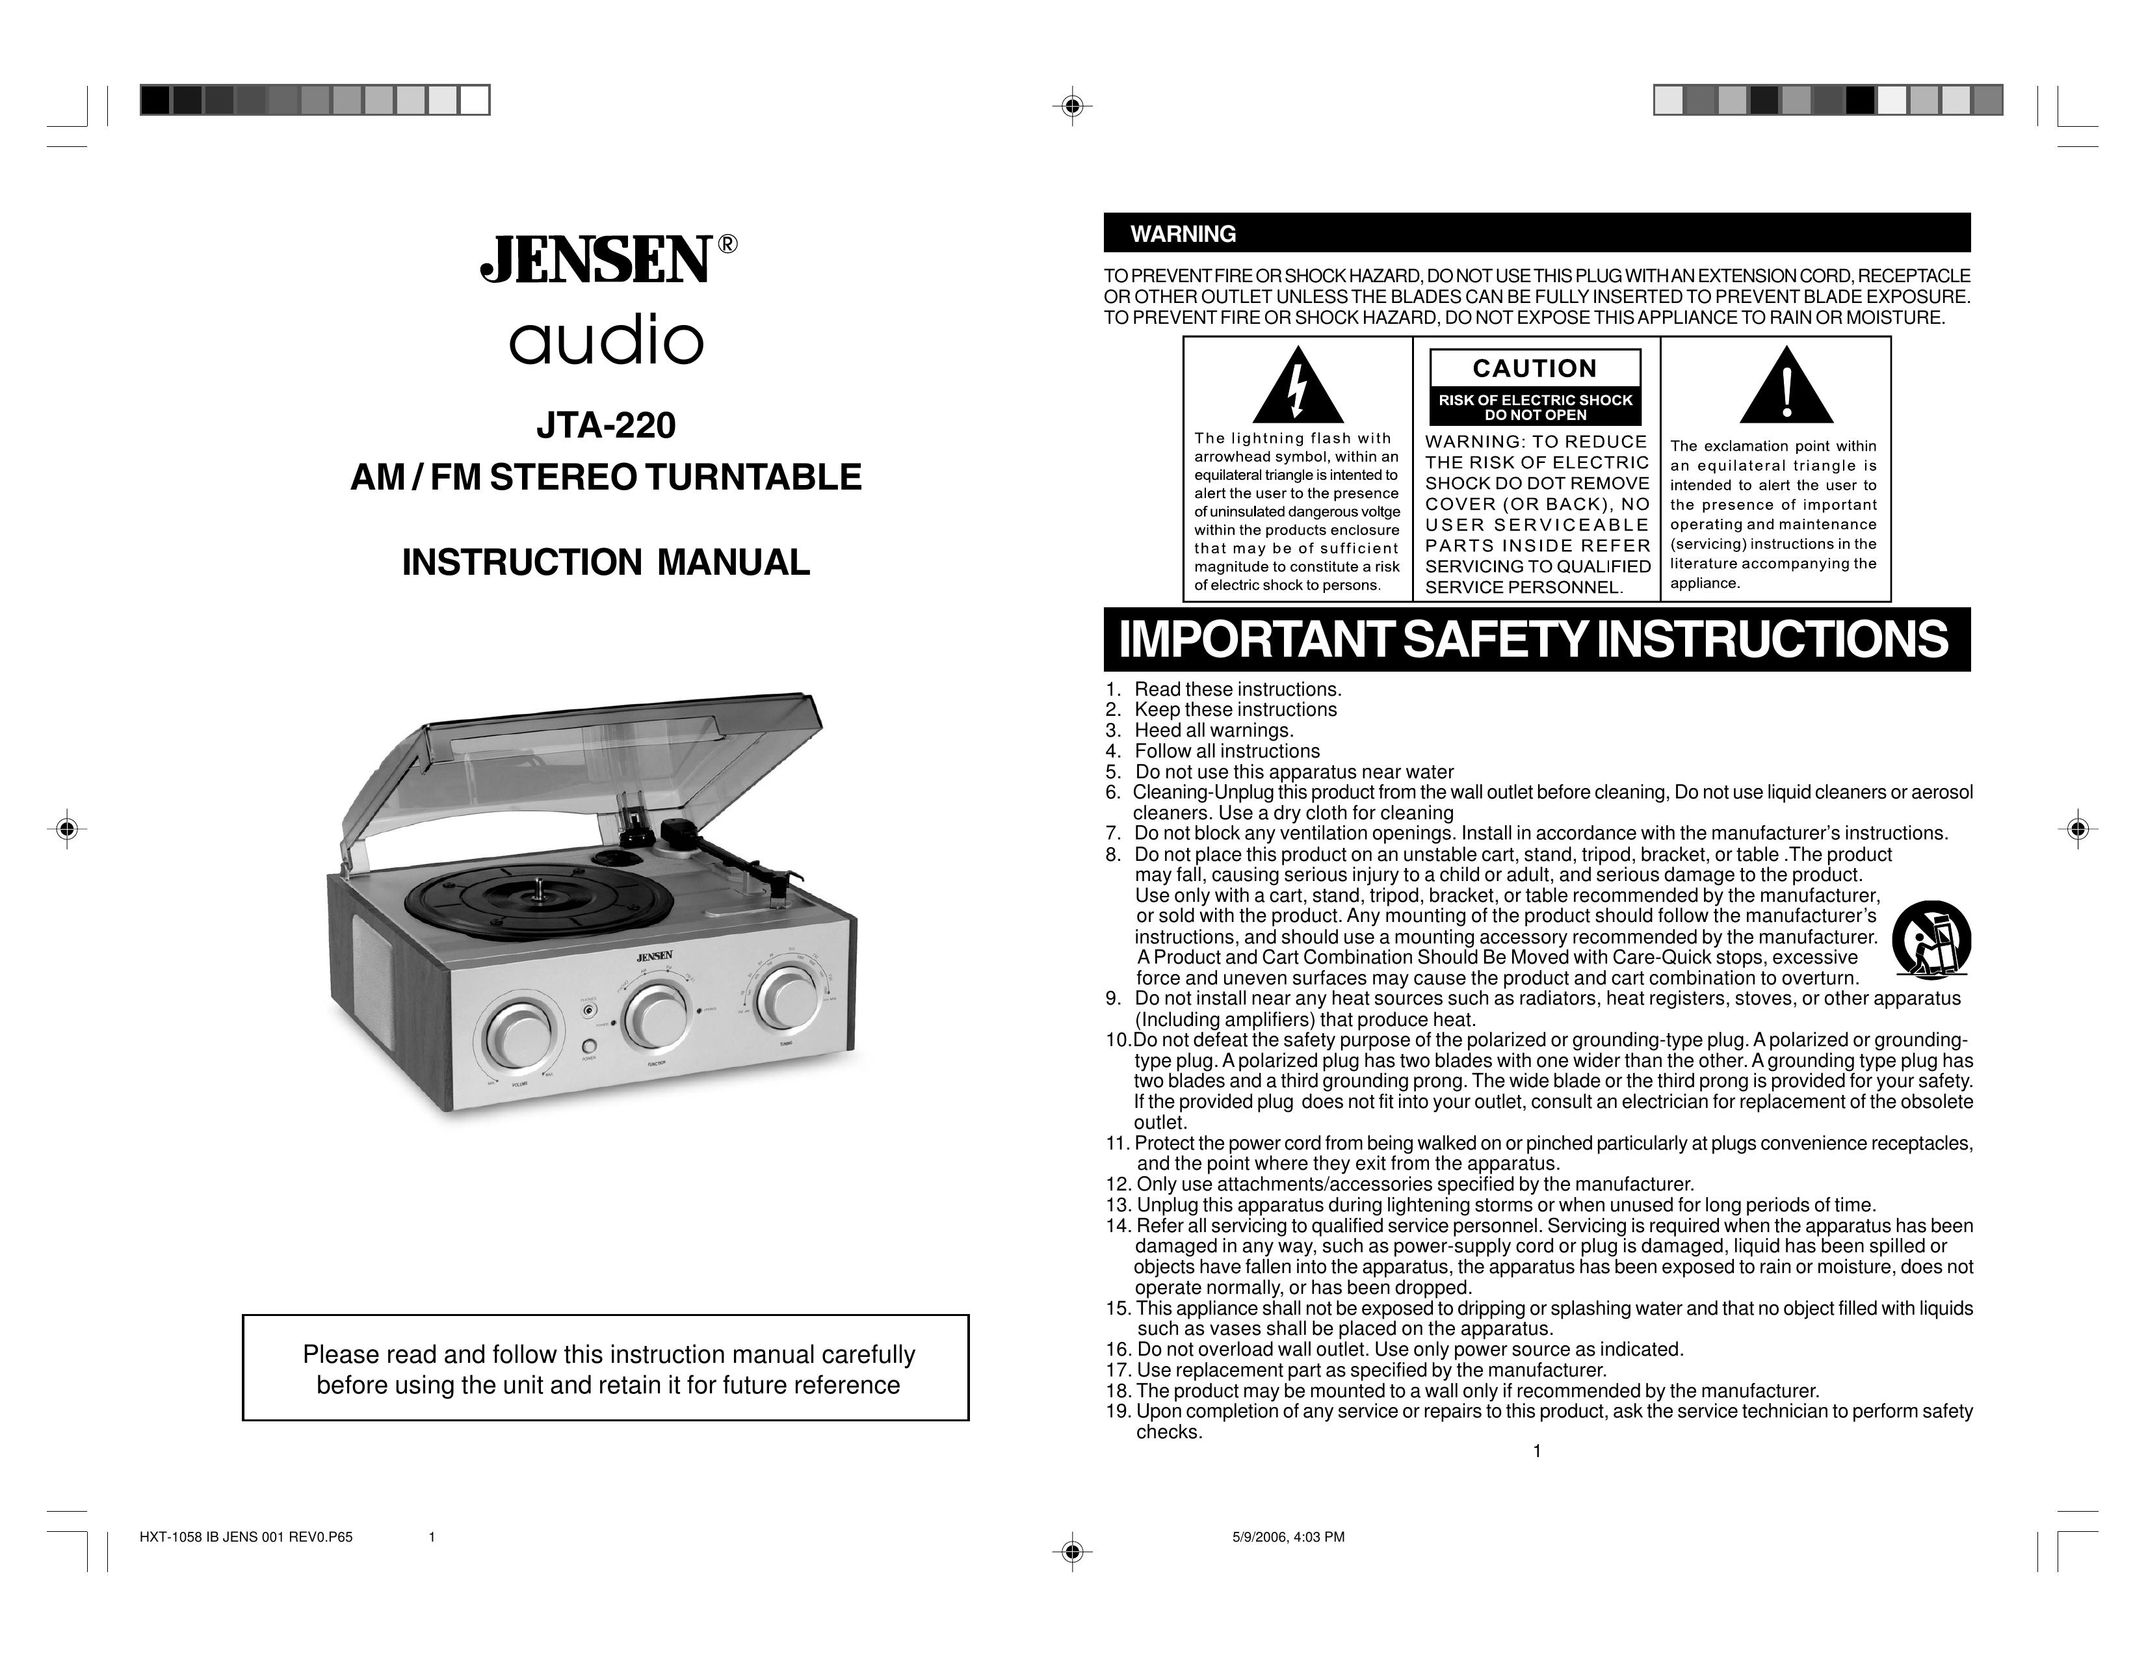 Jensen JTA-220 Turntable User Manual